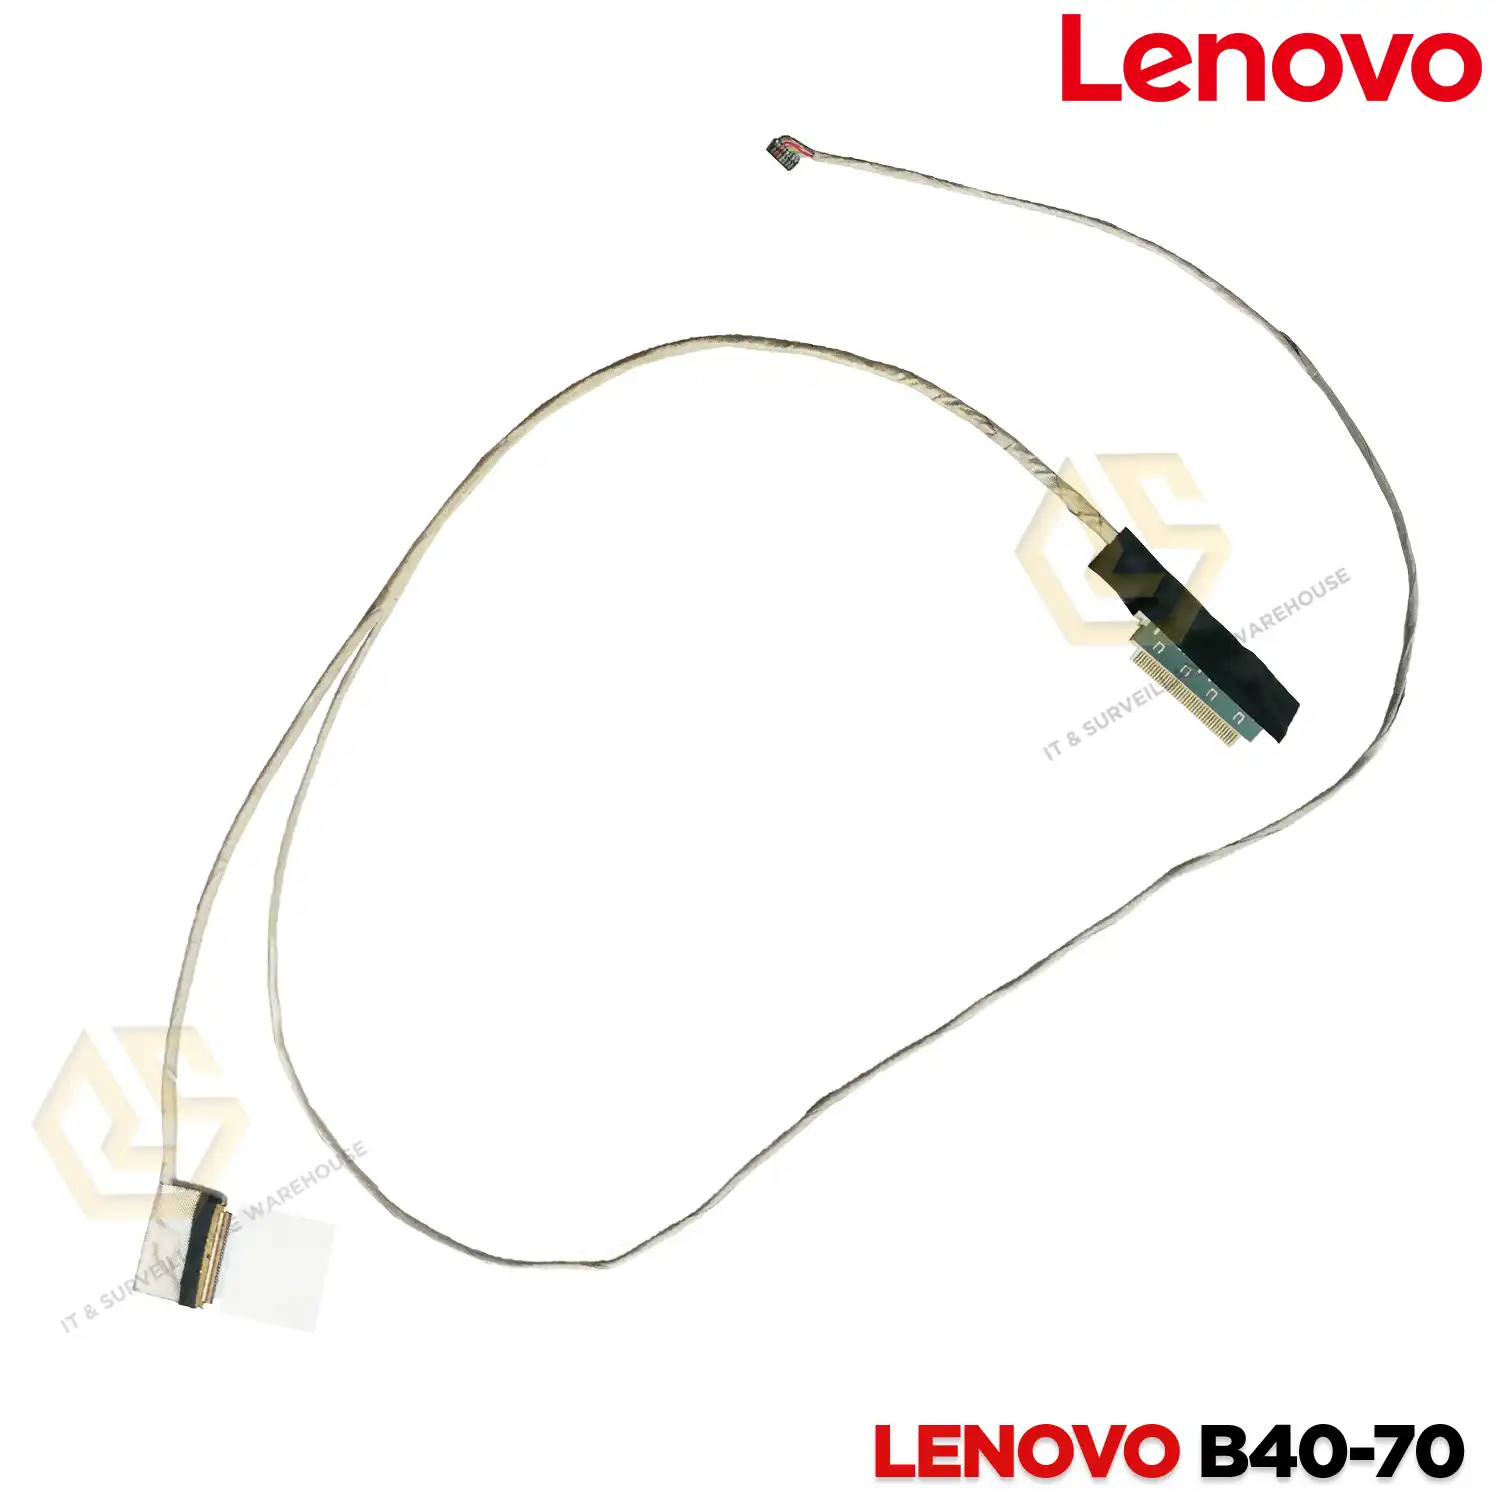 DISPLAY CABLE FOR LENOVO B40-70 |B45-70|300-14ISK